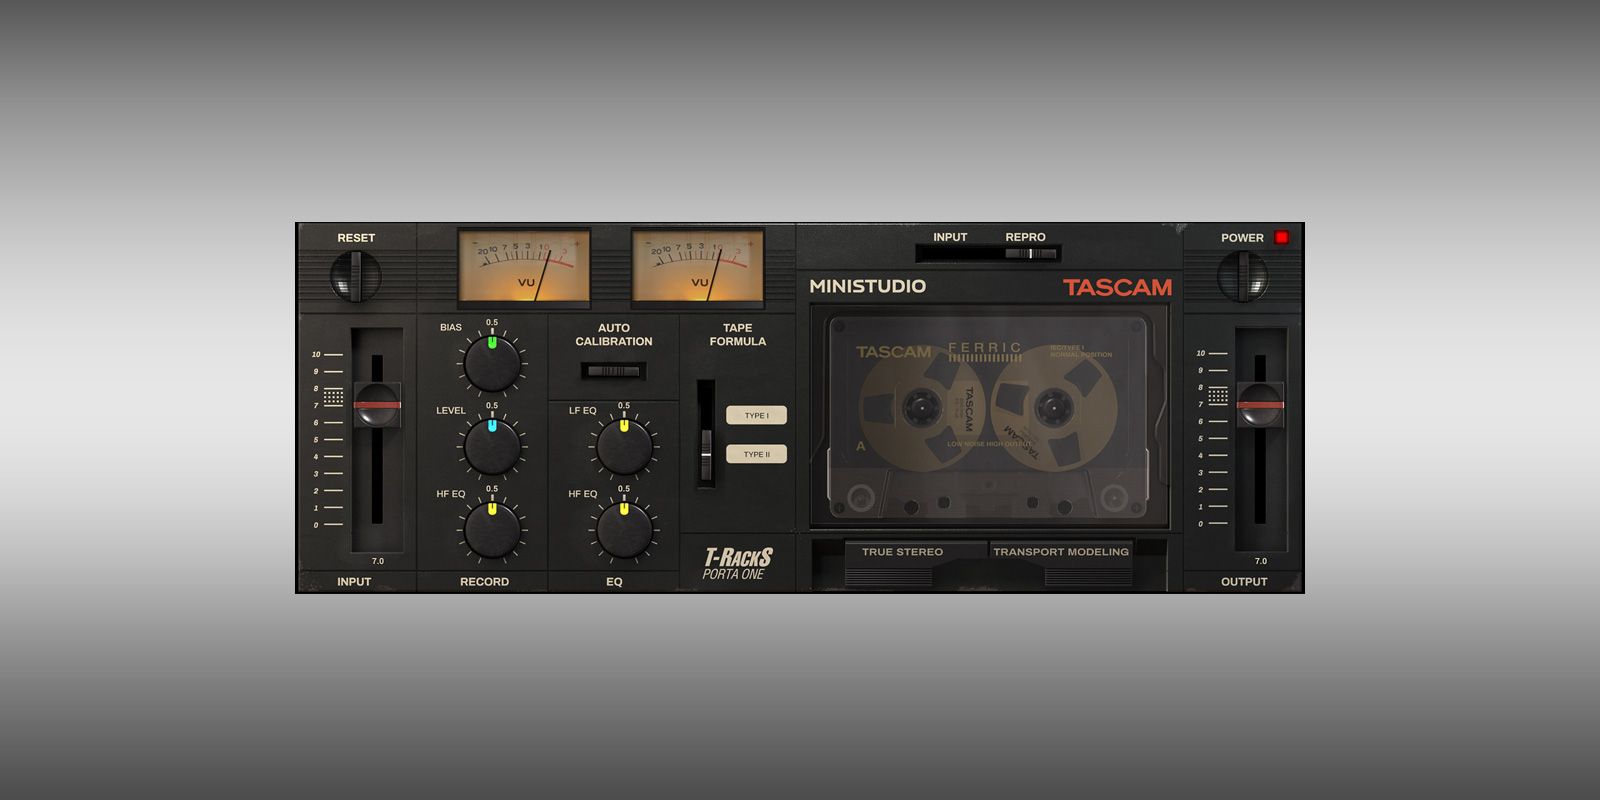 IK Multimedia Announces the T-RackS TASCAM Tape Collection, News Details